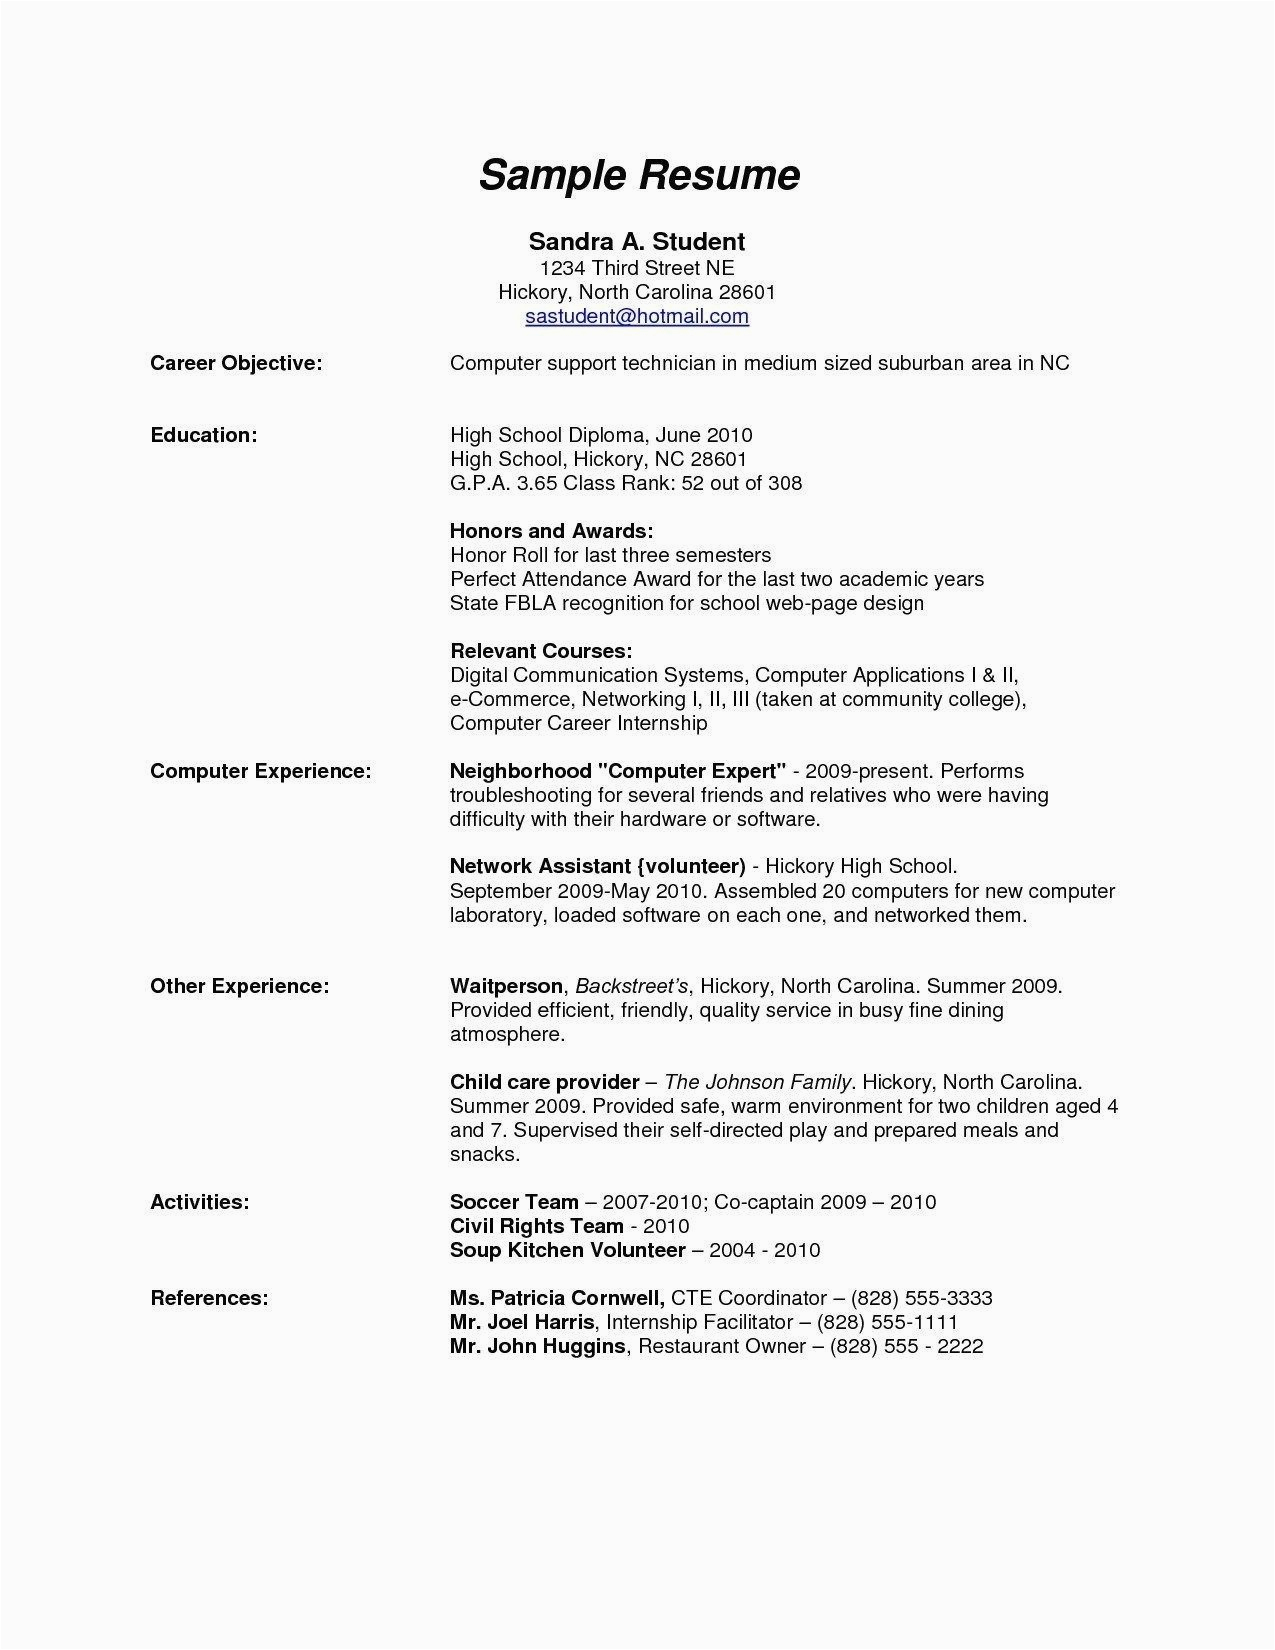 Sample Resume for New High School Graduate High School Graduate Resume Template Download – Resume